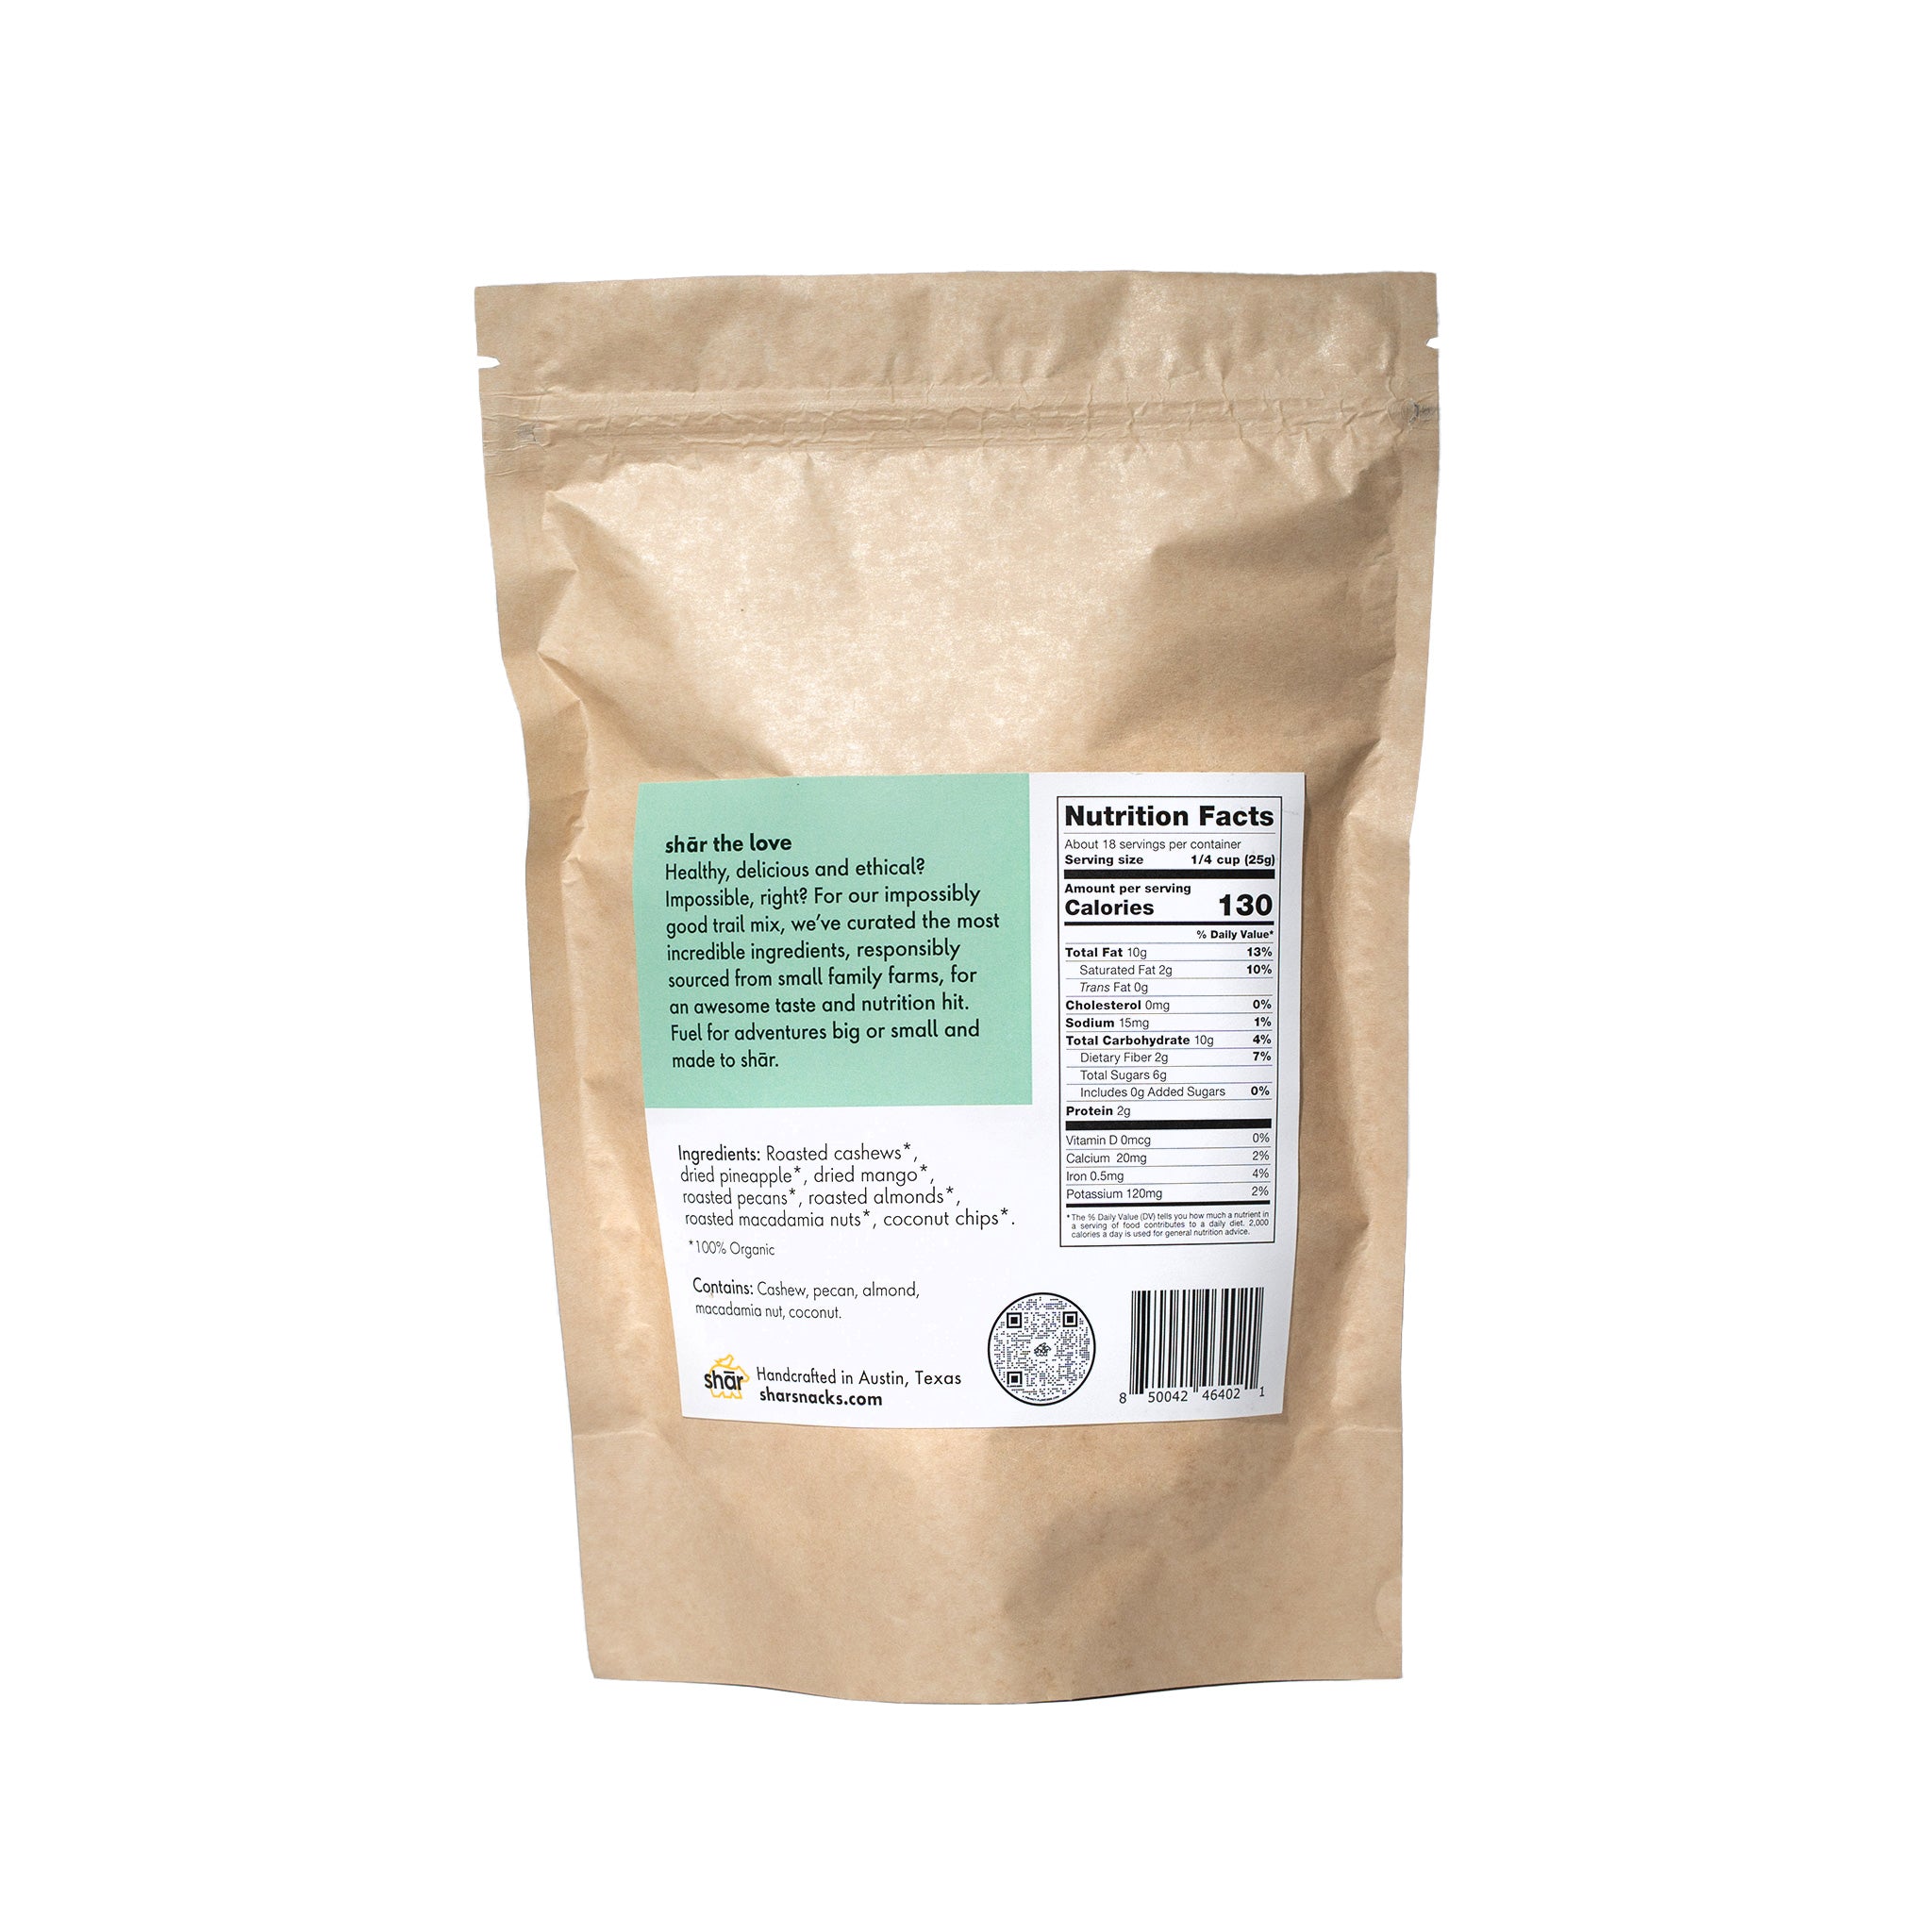 1.0 lb organic shār bag - Tropical small batch